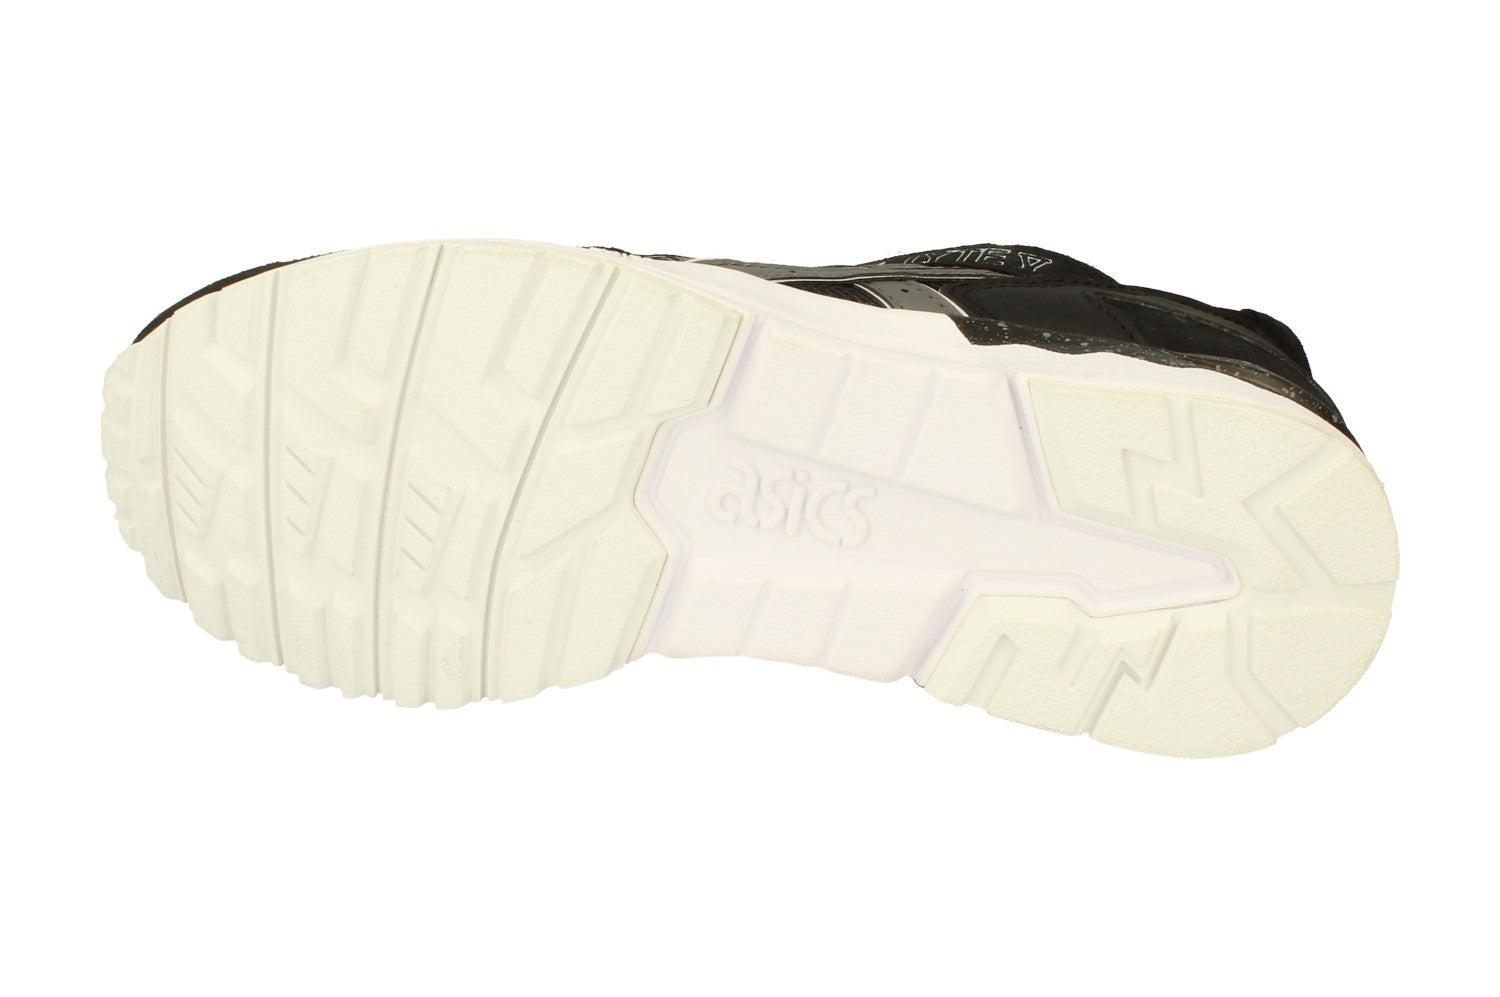 versus preparar Contando insectos Buy Asics Gel-Lyte V Mens HN6A4 9011 Sneaker Shoes | KicksWorldwide.com